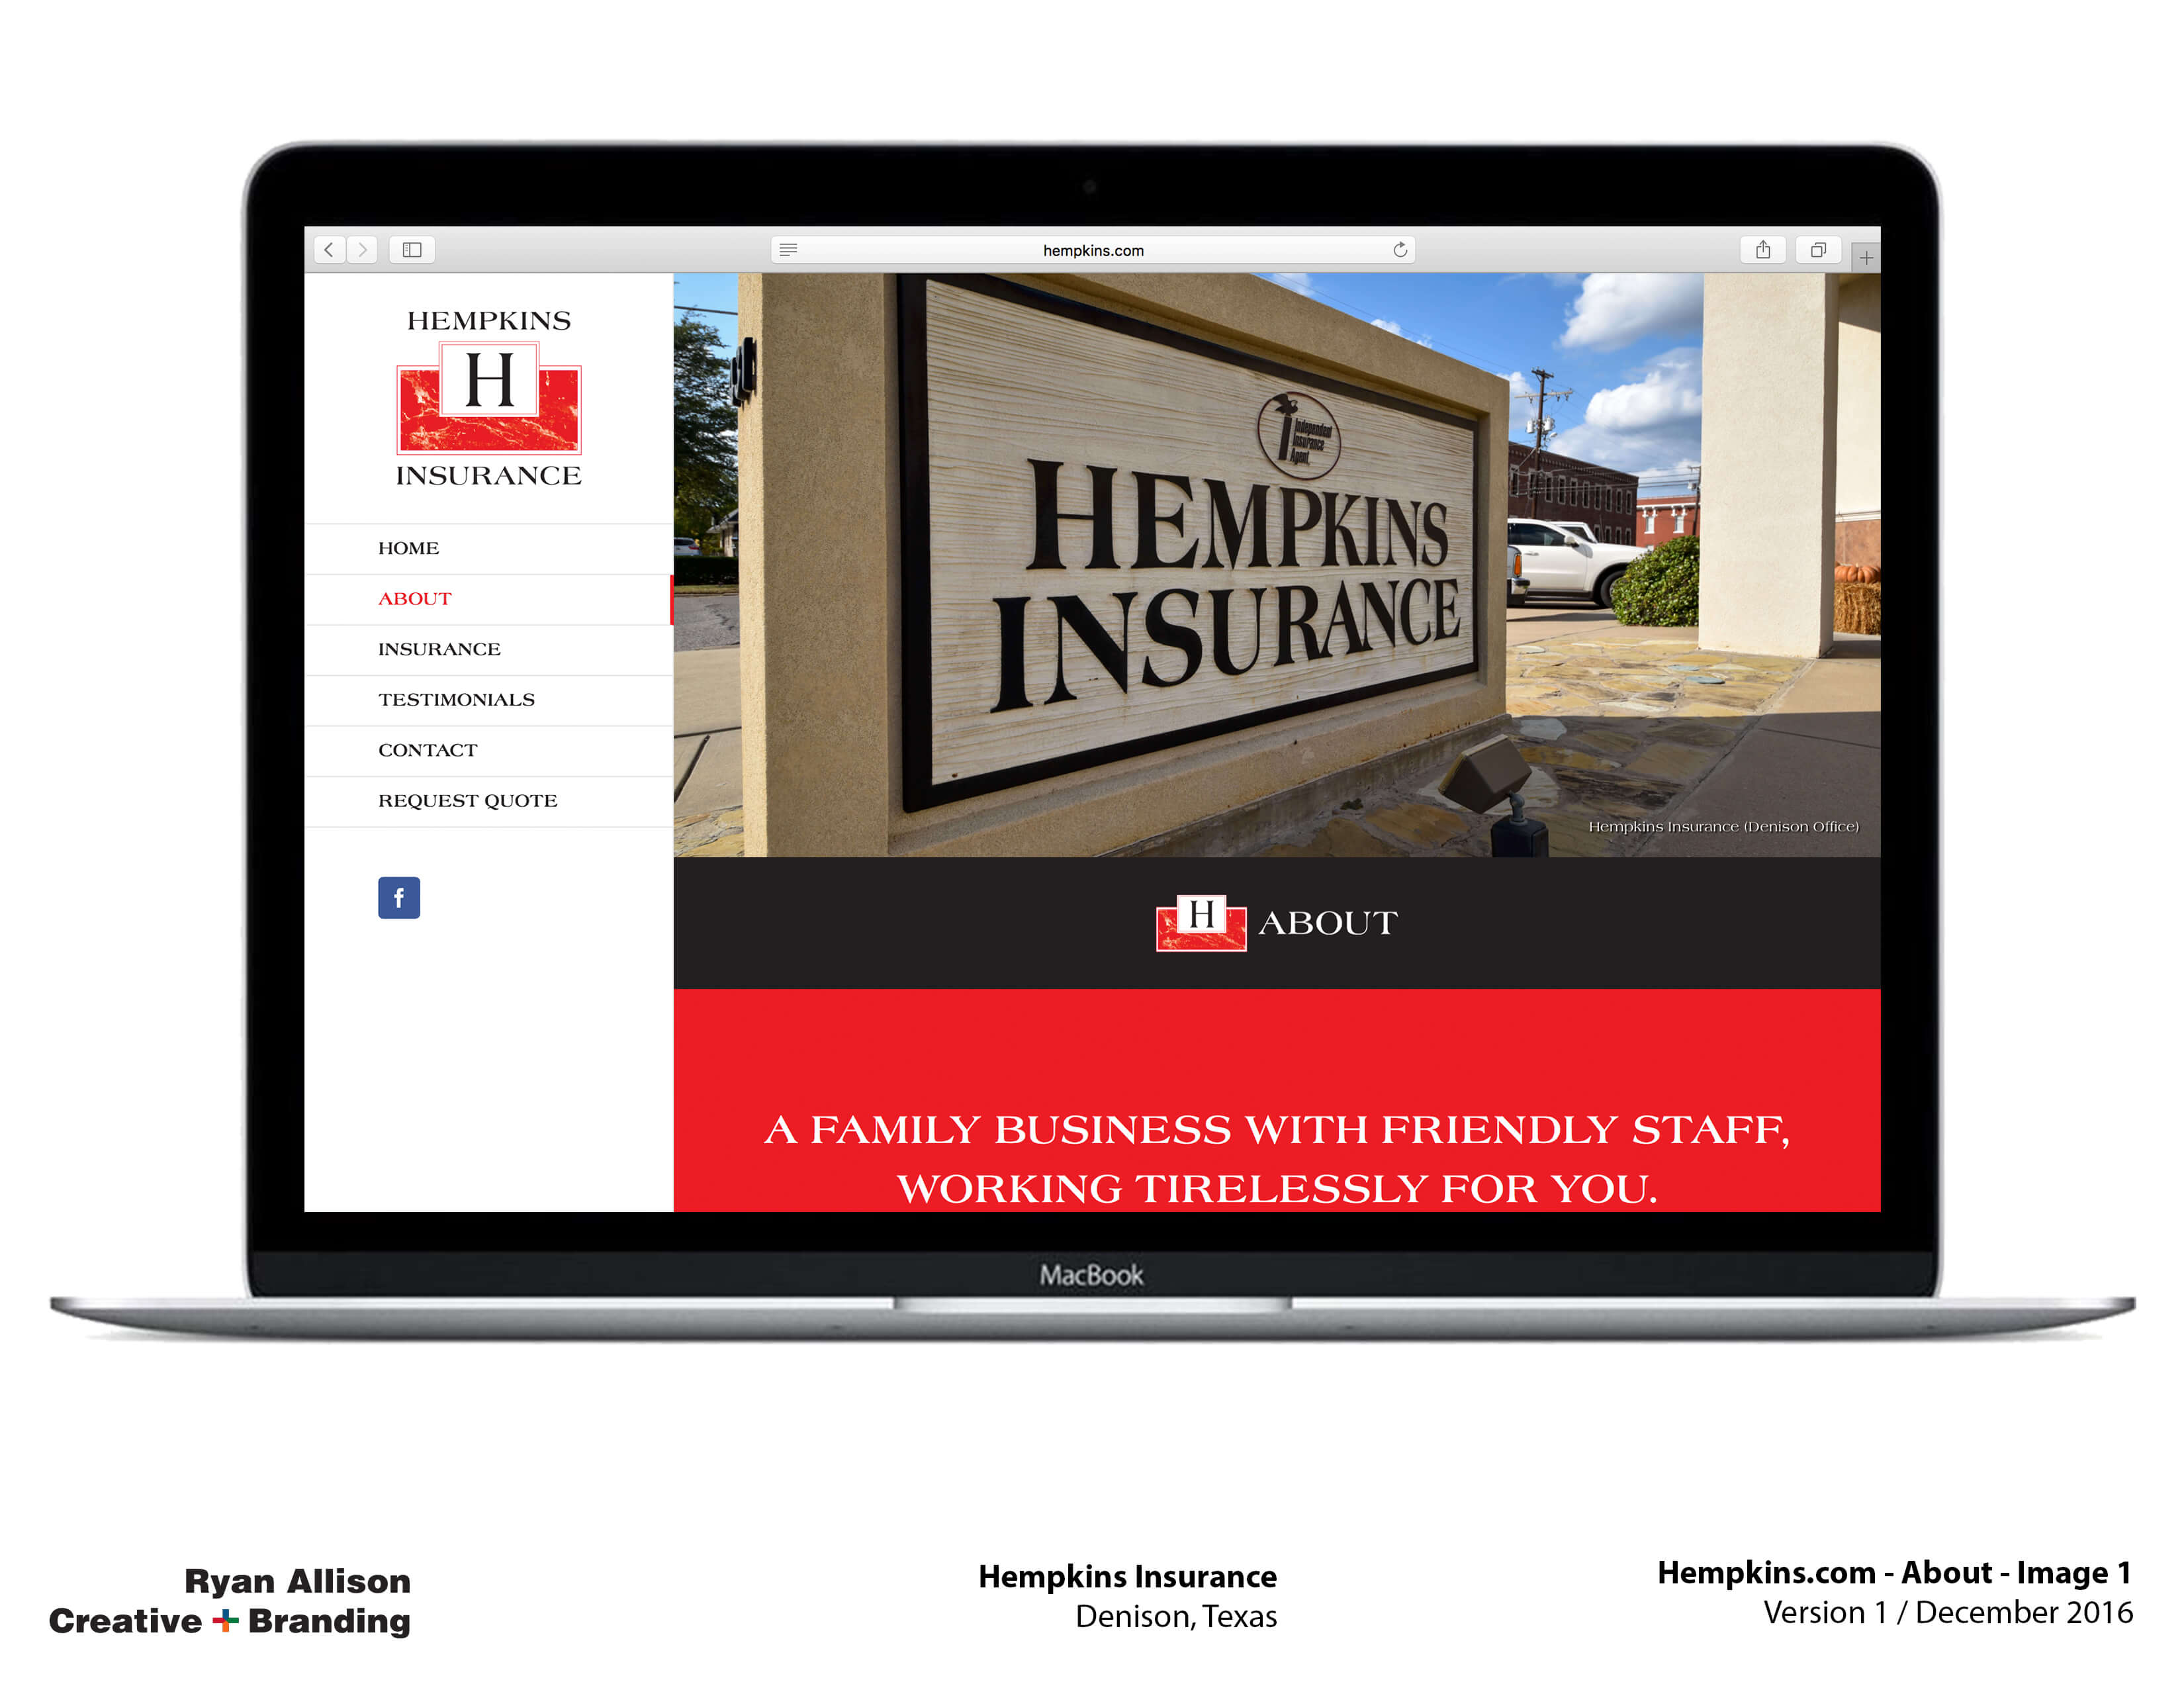 Hempkins Insurance Website About 1 - Project - Ryan Allison Creative + Branding